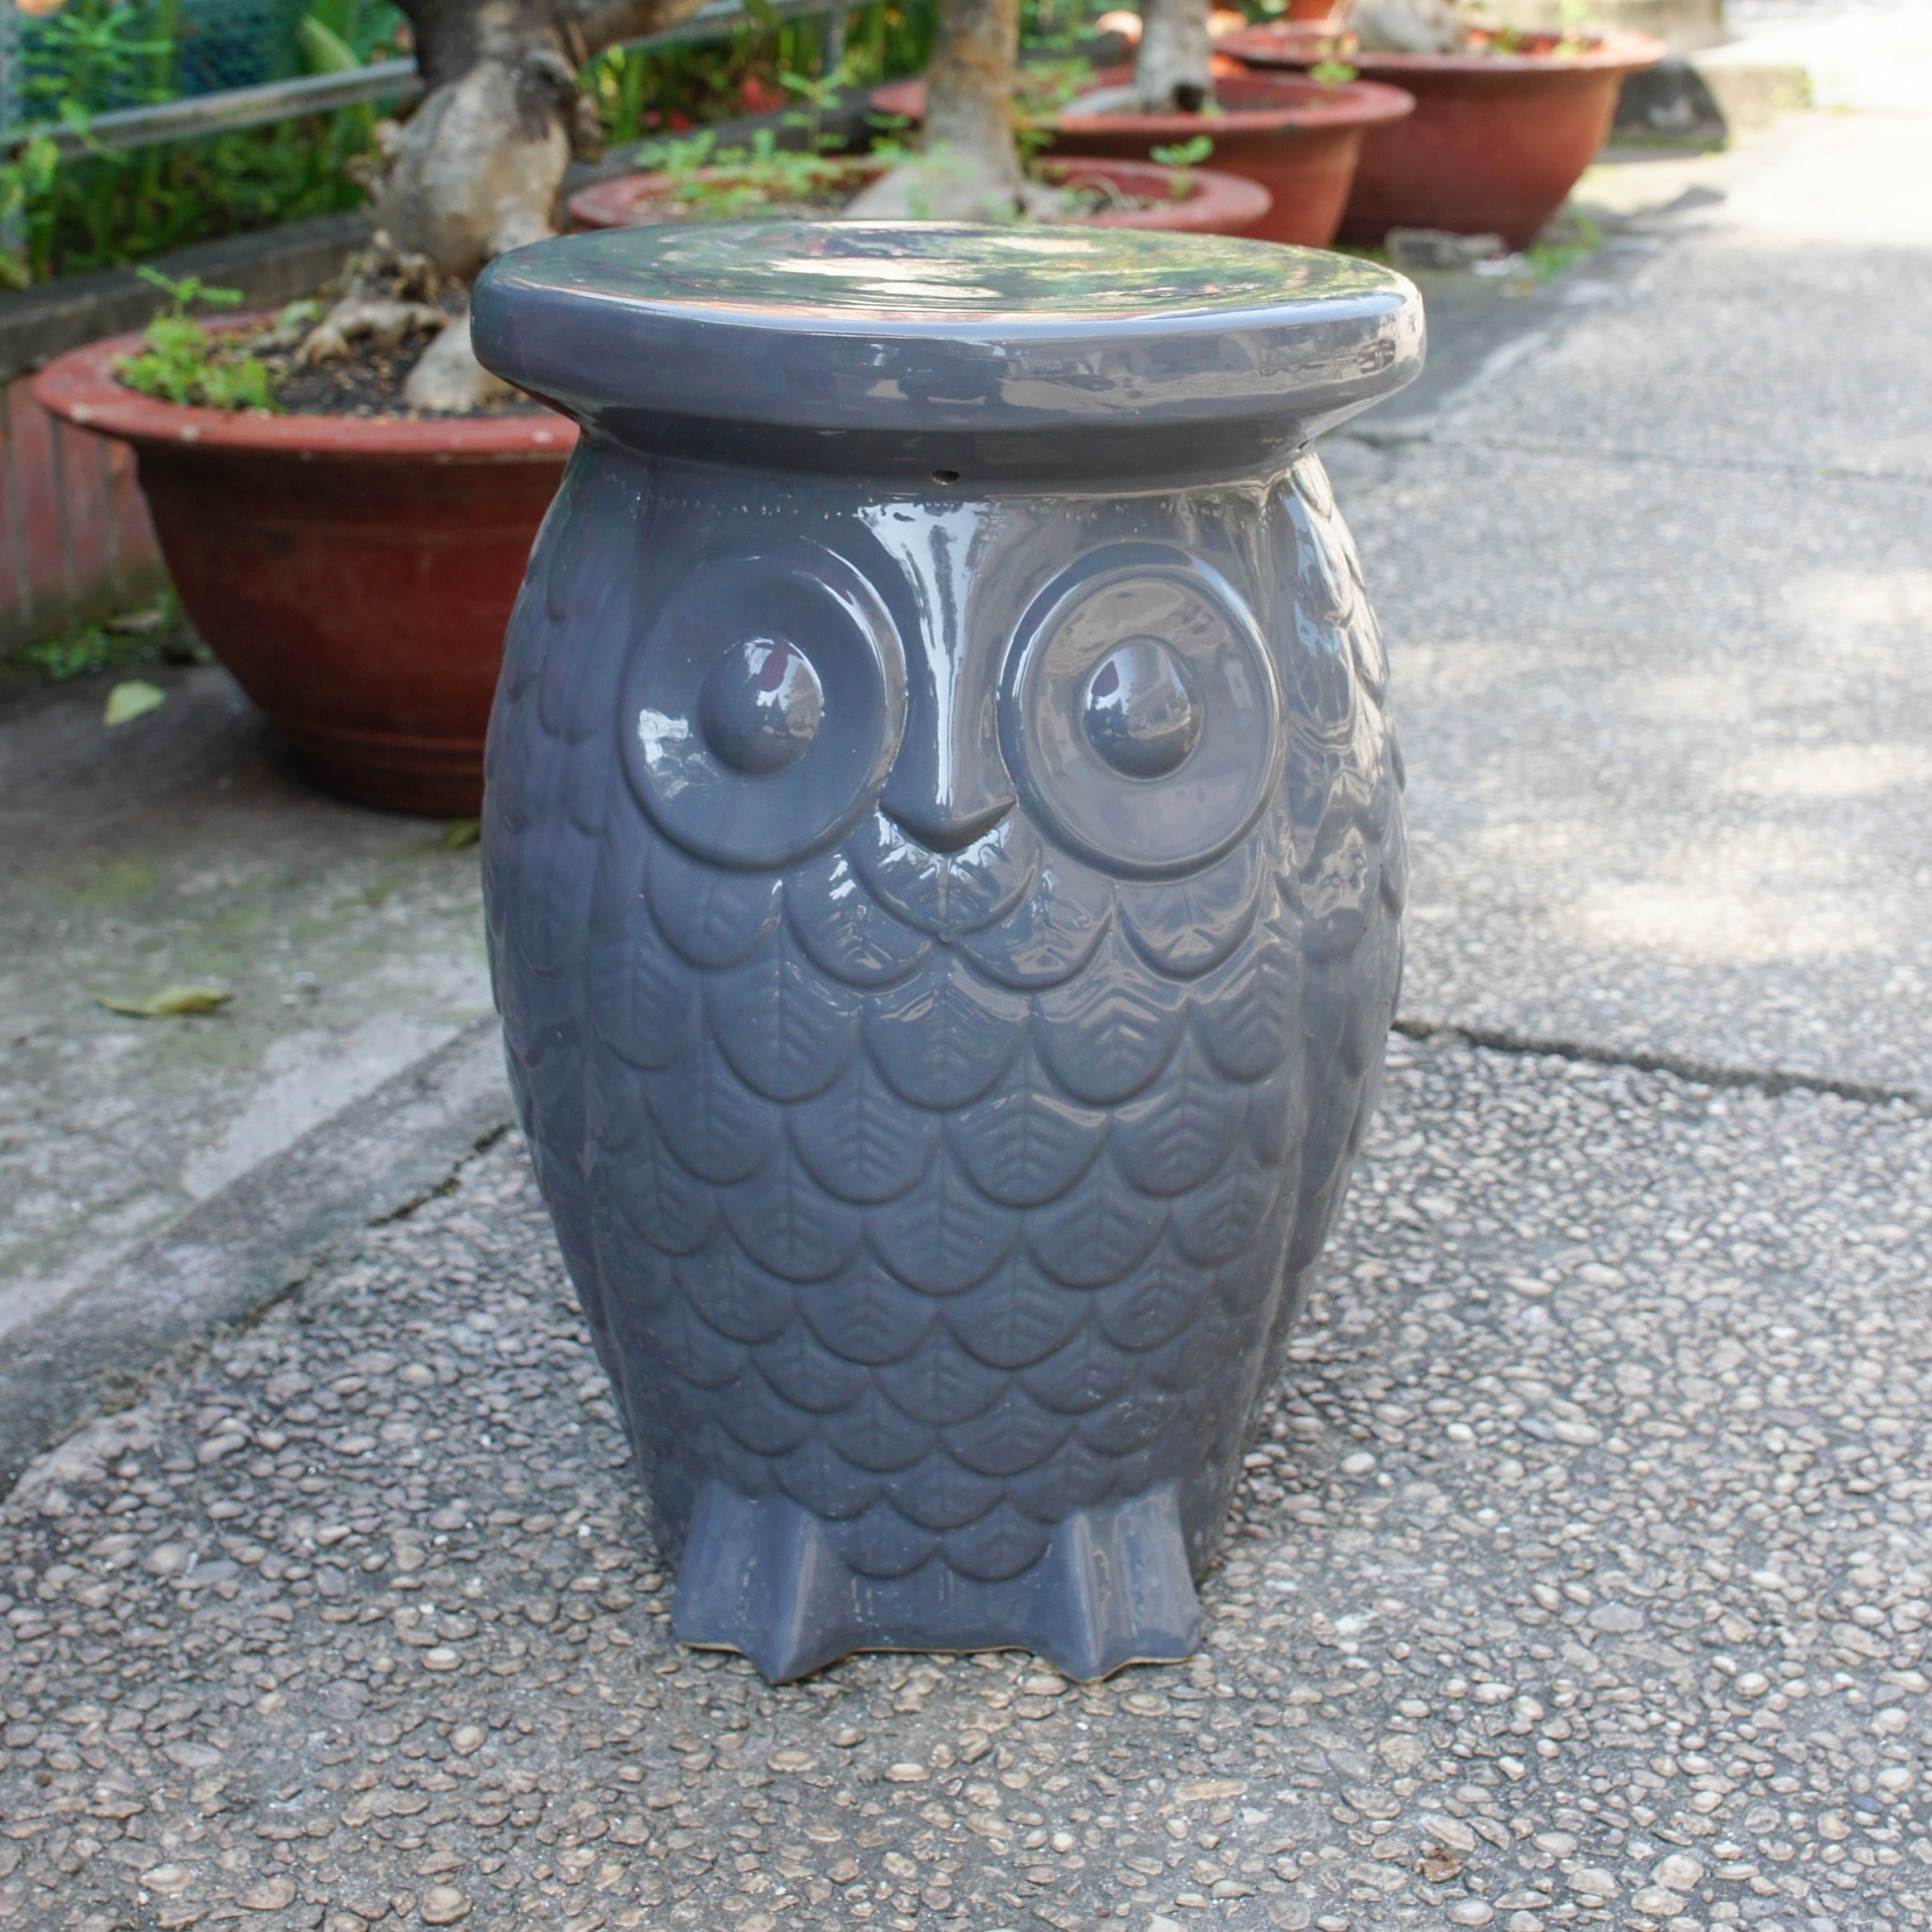 International Caravan Wise Old Owl Ceramic Garden Stool - image 3 of 5